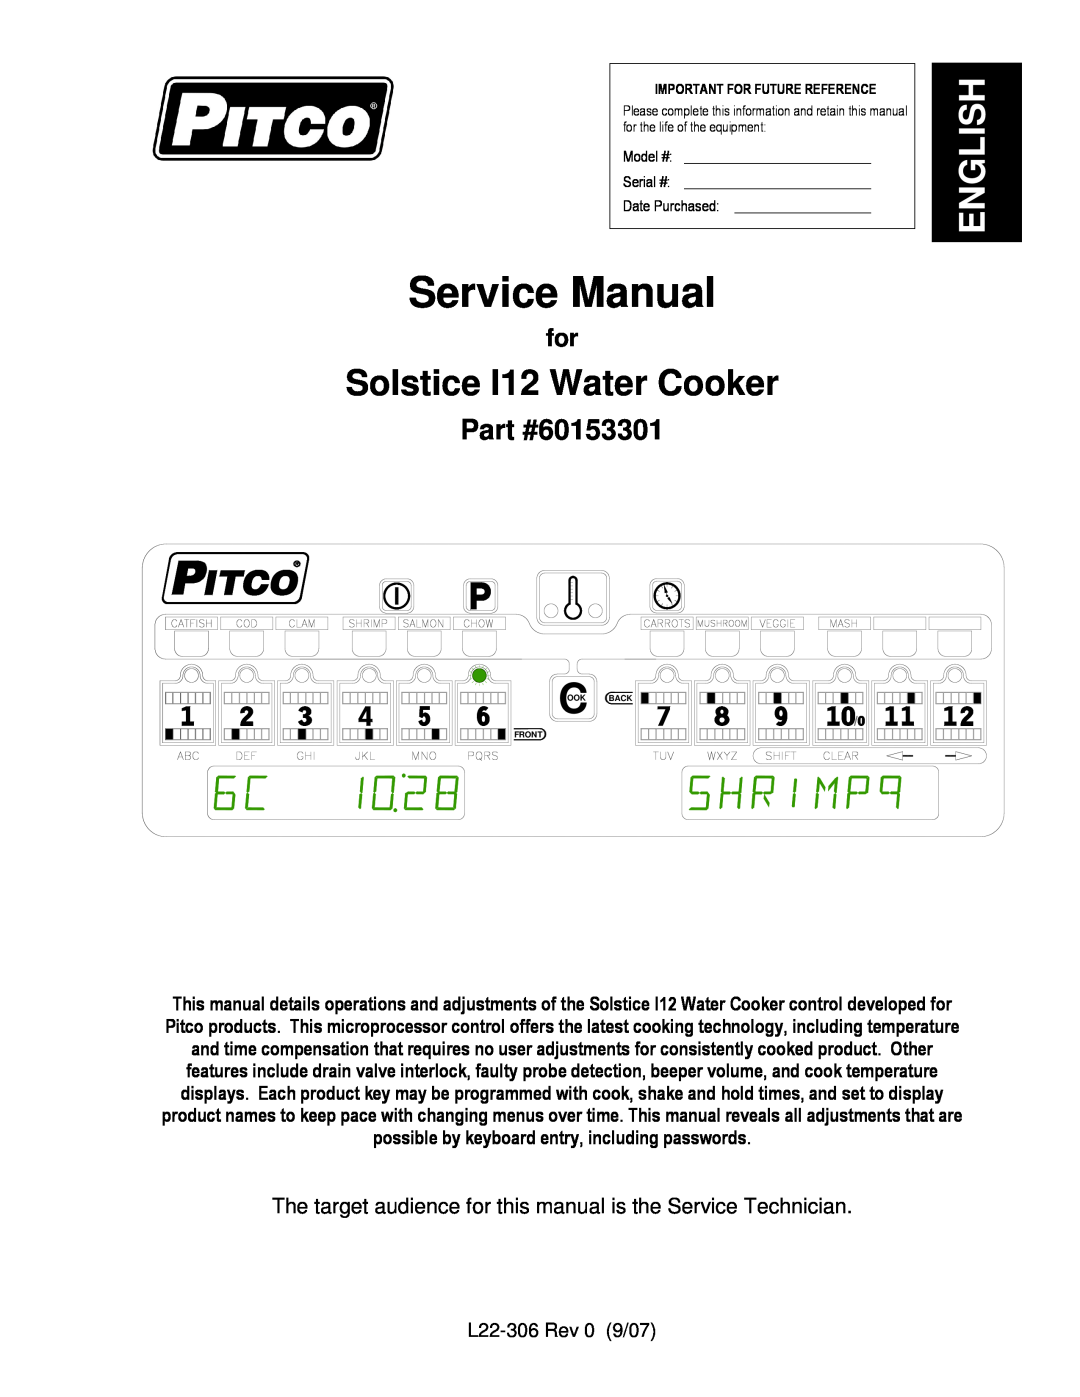 Pitco Frialator L22-306 service manual English, Solstice I12 Water Cooker, 60153301 